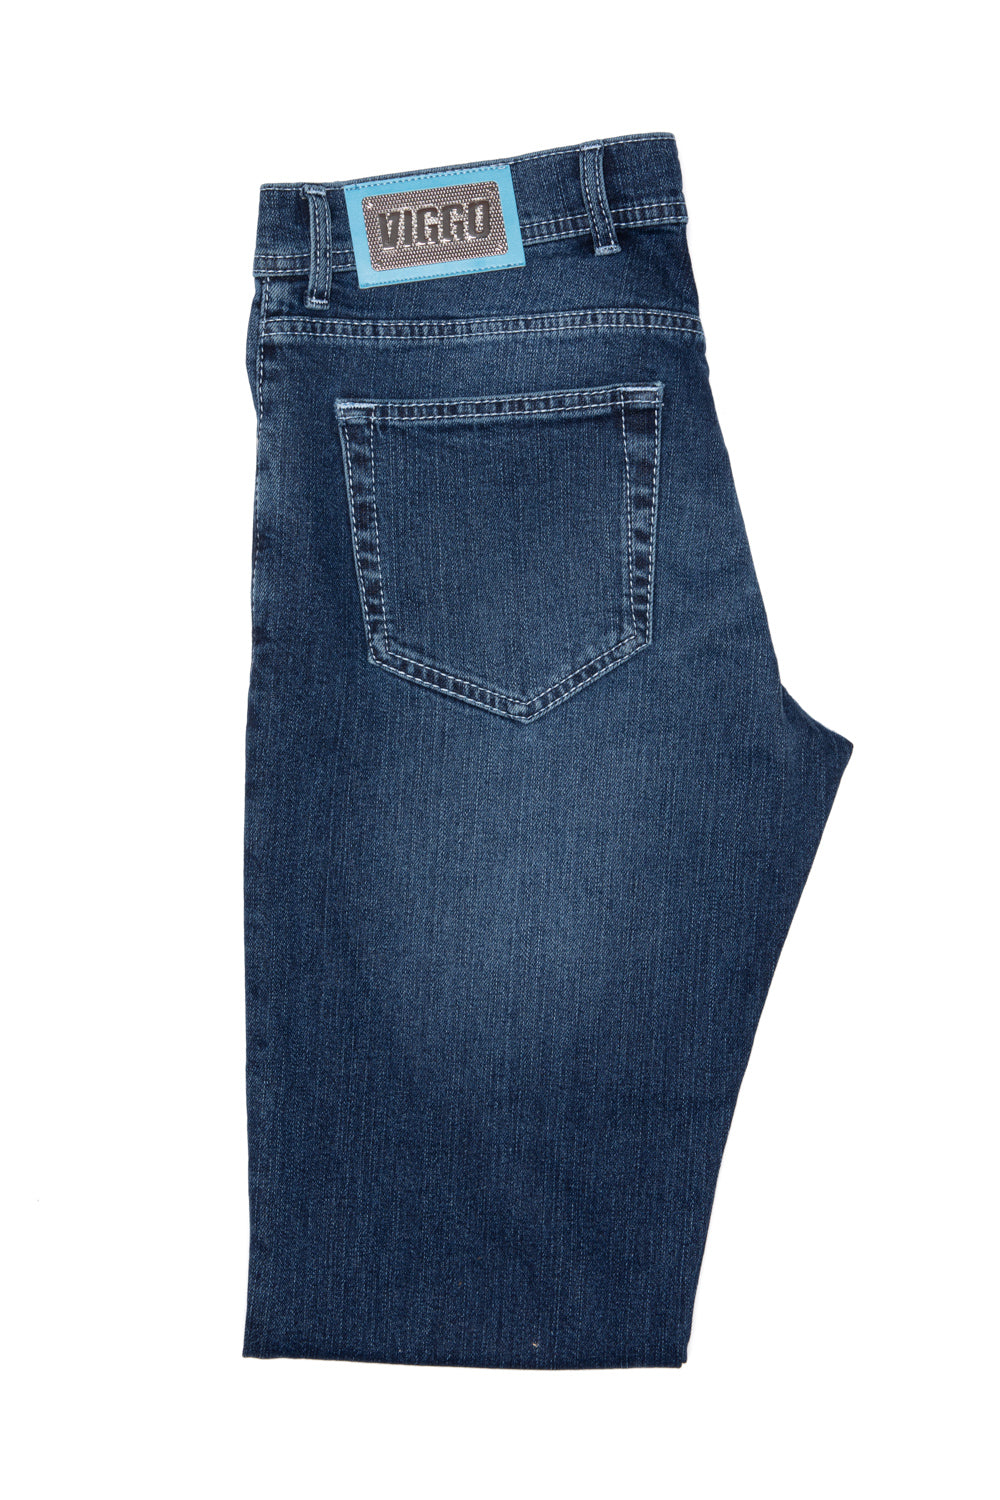 Blue slim fit monkey jeans